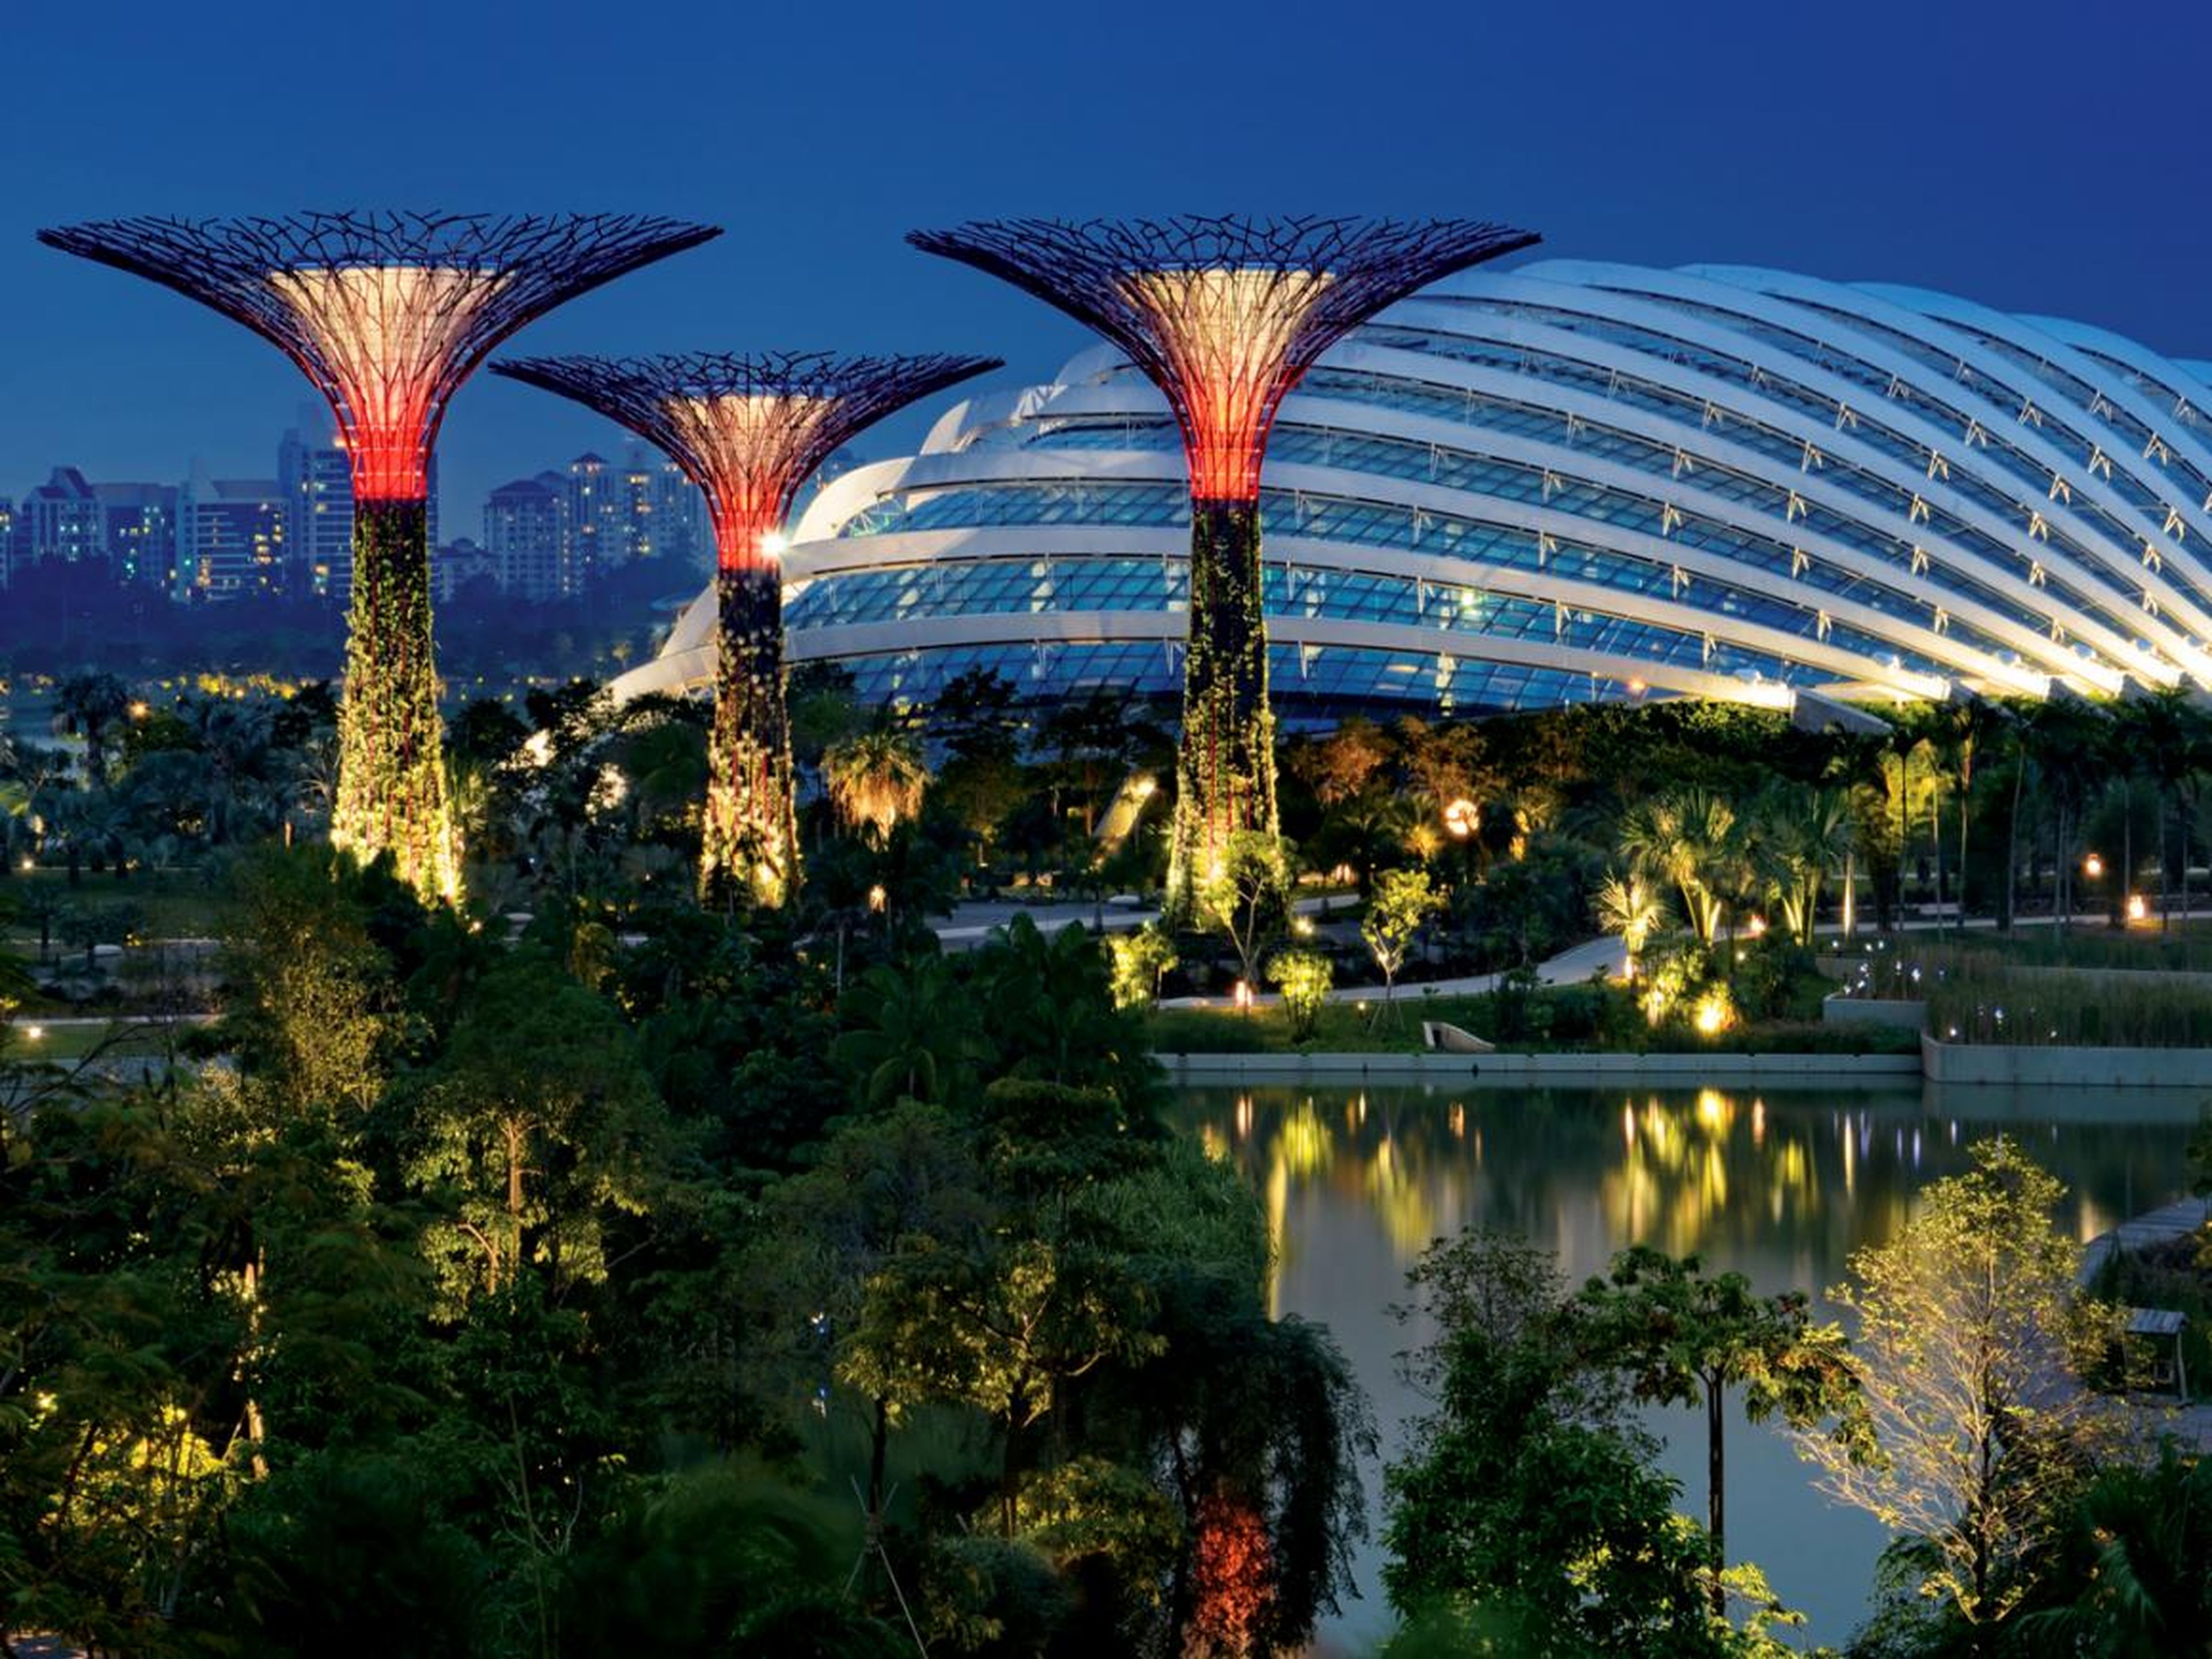 Singapore's Gardens by the Bay, diseñado por Grant Associates y Wilkinson Eyre Architects.